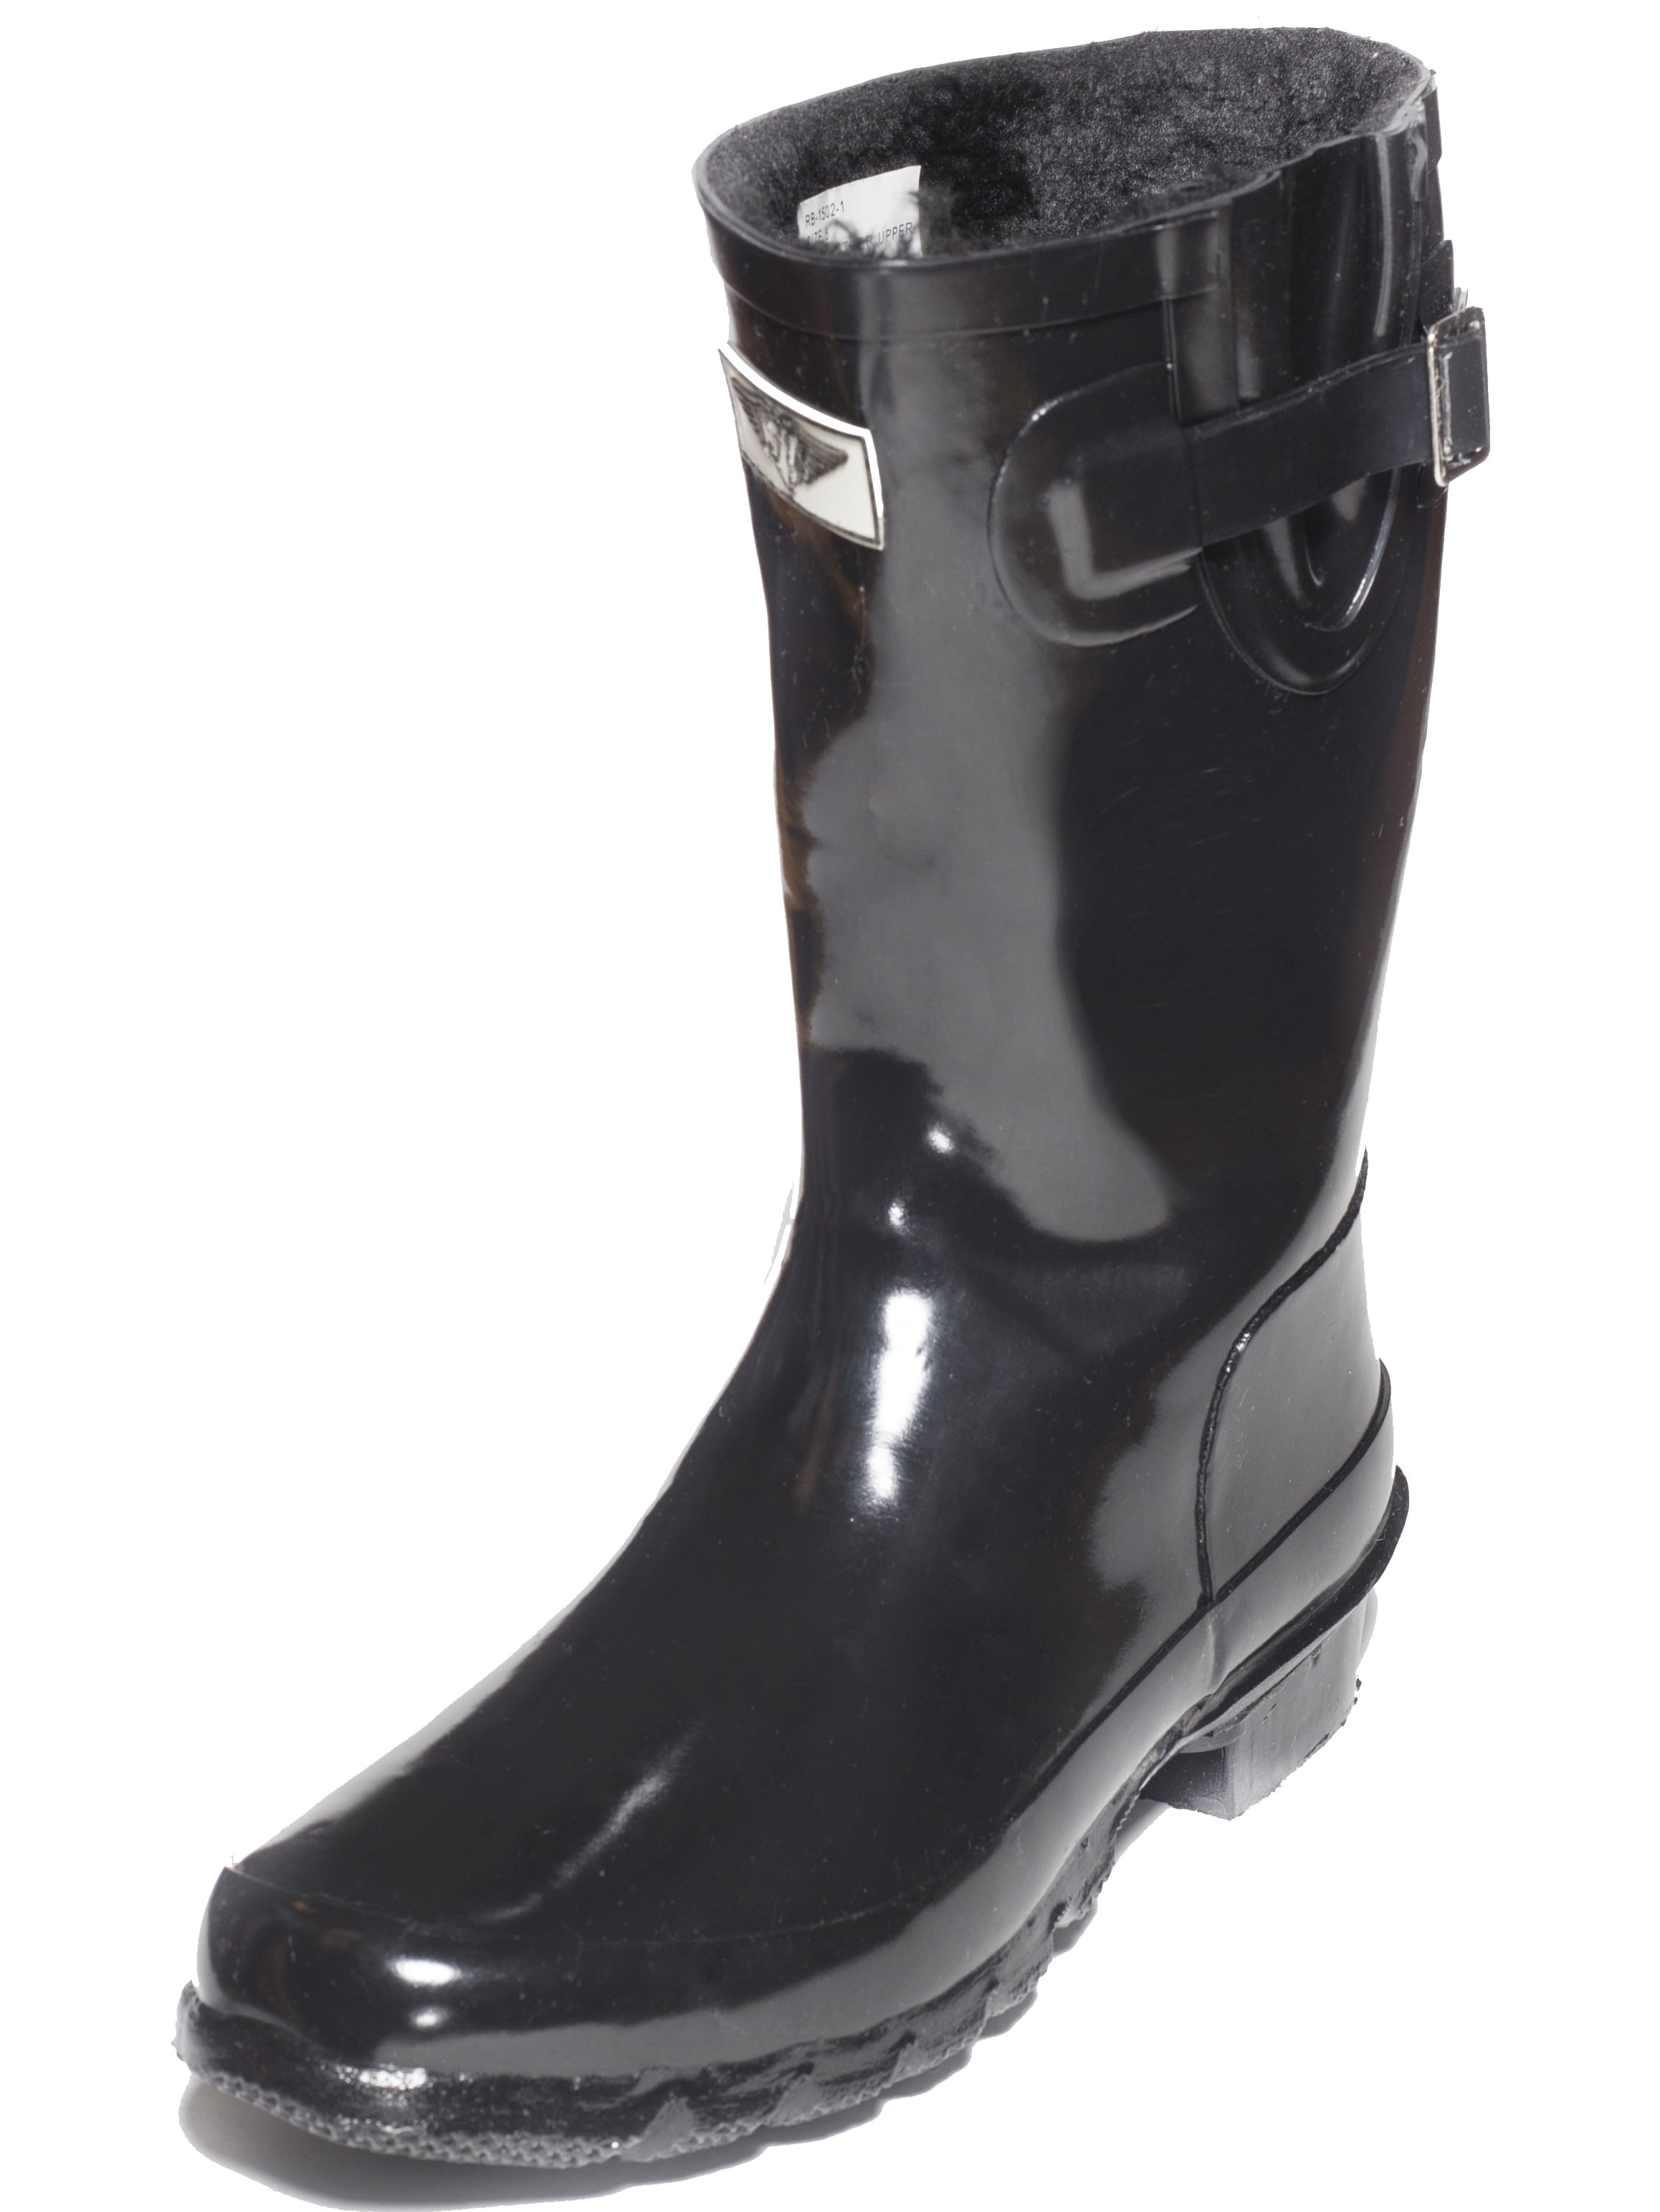 Forever Young Women's Black Rubber Mid-Calf Basic Rain Boots - Walmart.com